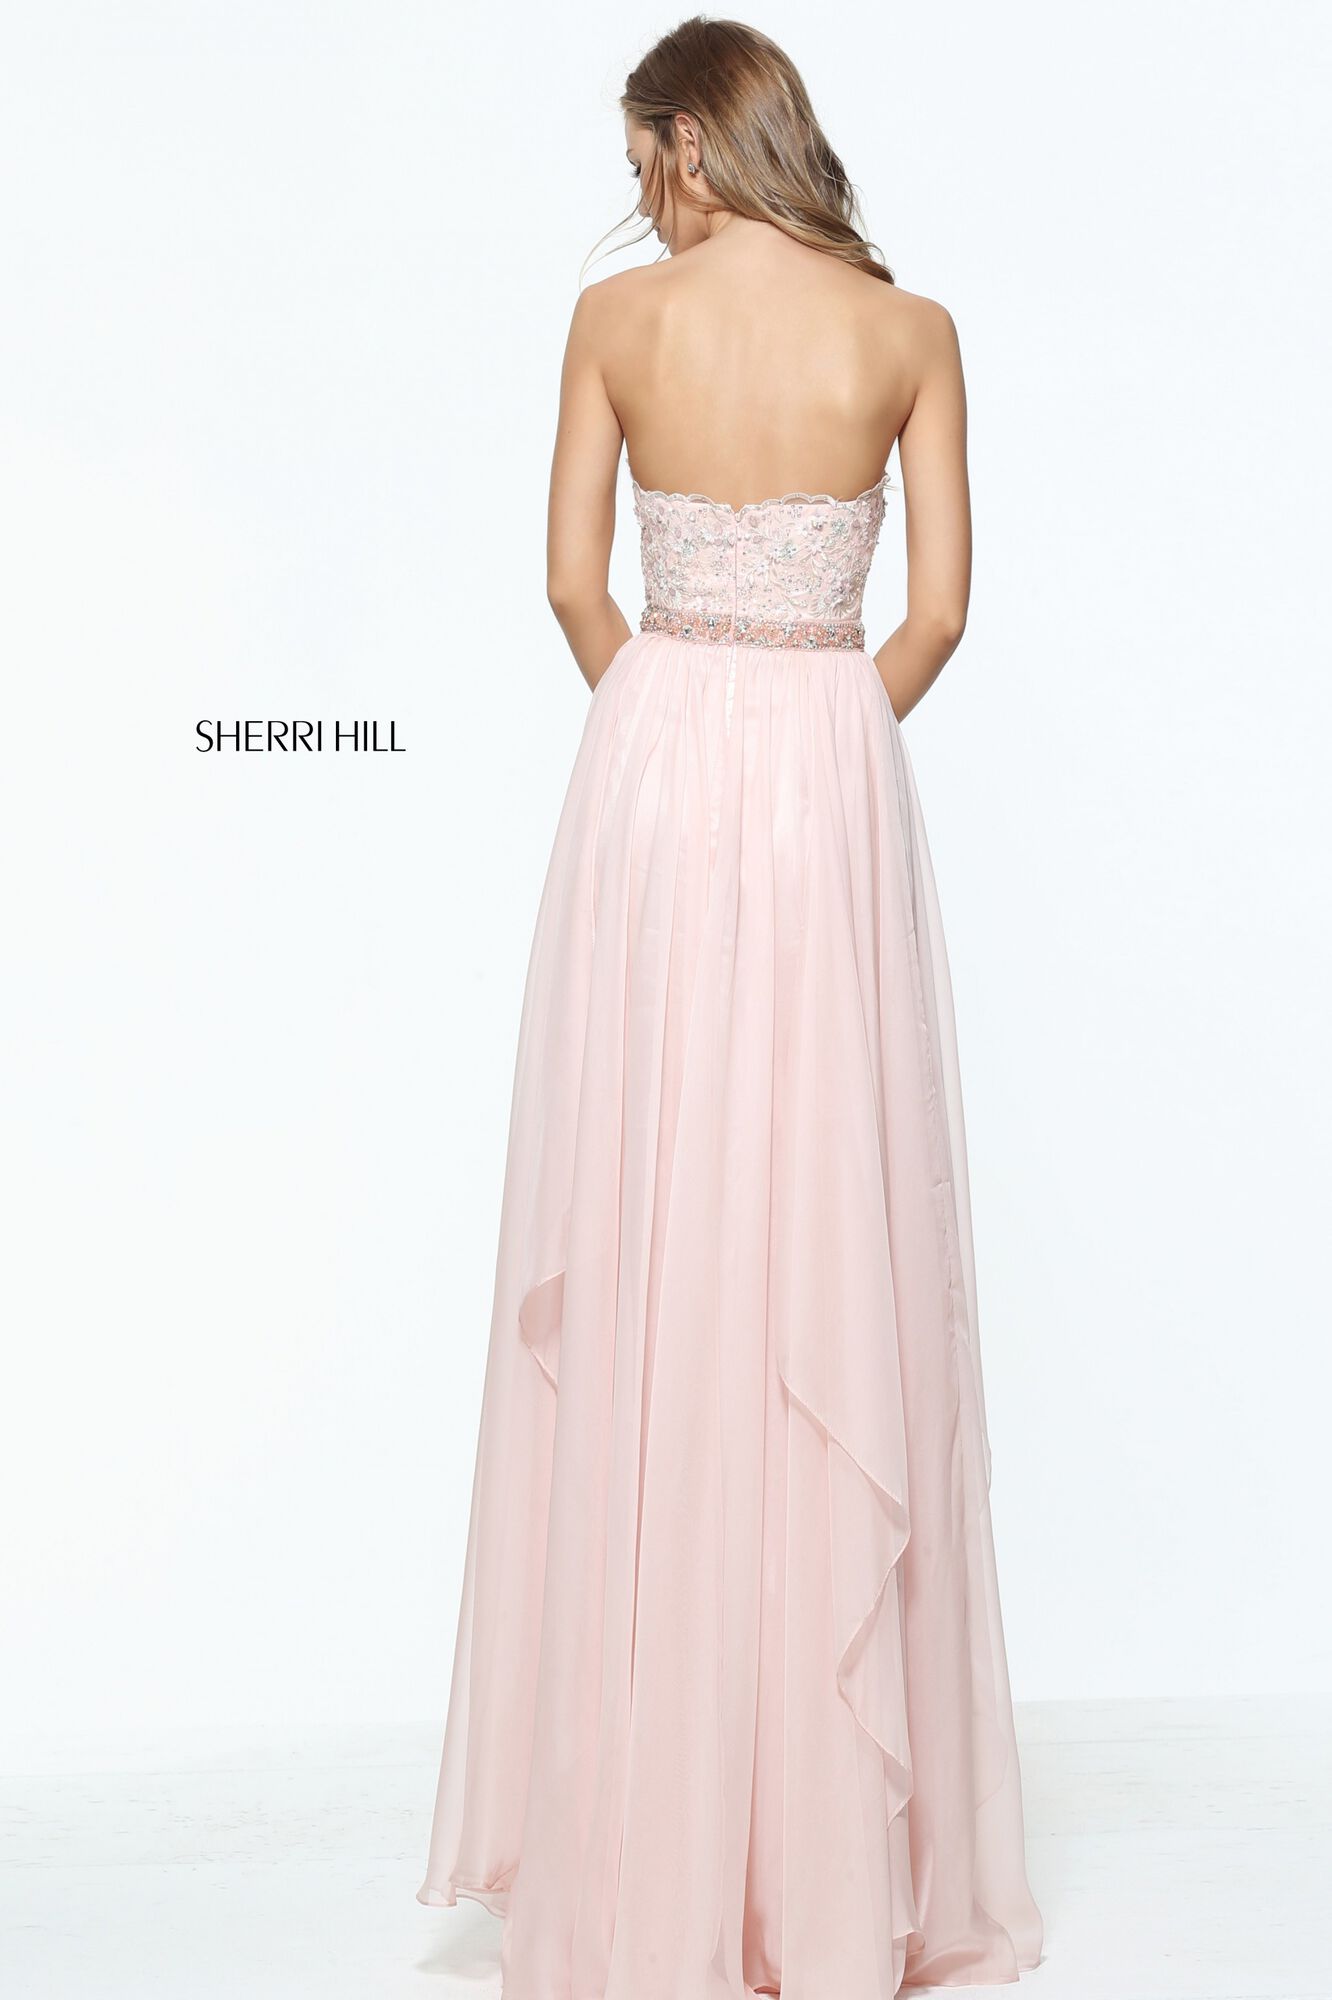 Buy dress style № 51052 designed by SherriHill